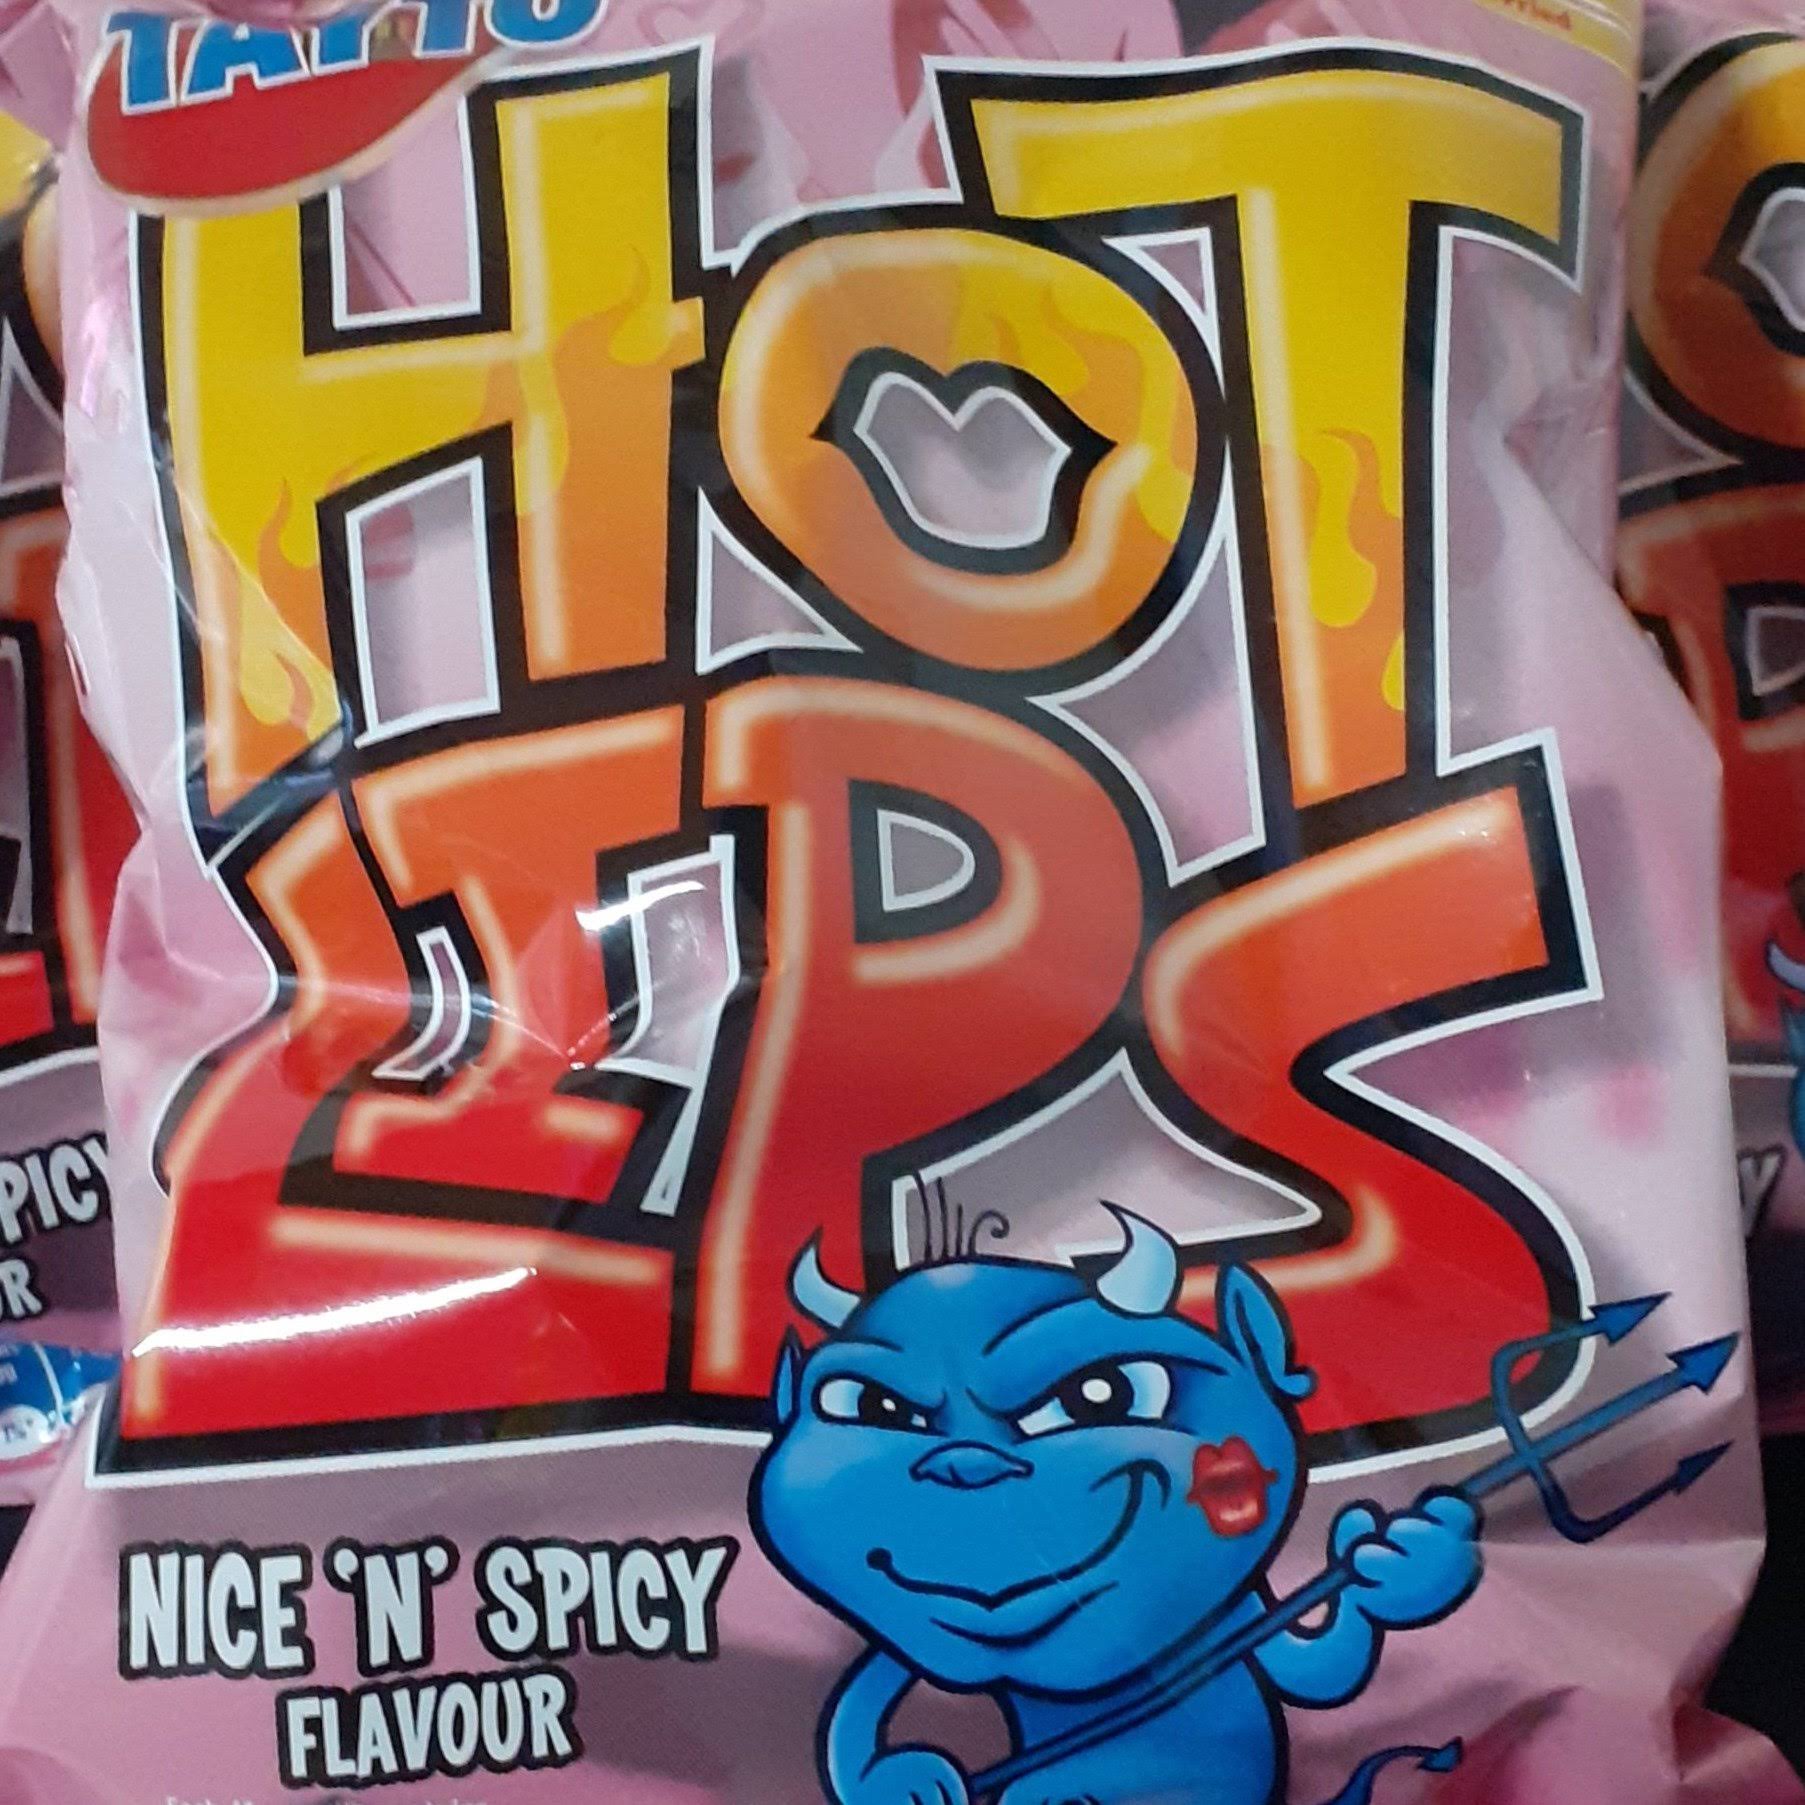 Tayto Hot Lips Crisp Snack - Nice 'n' Spicy Flavour, 45g